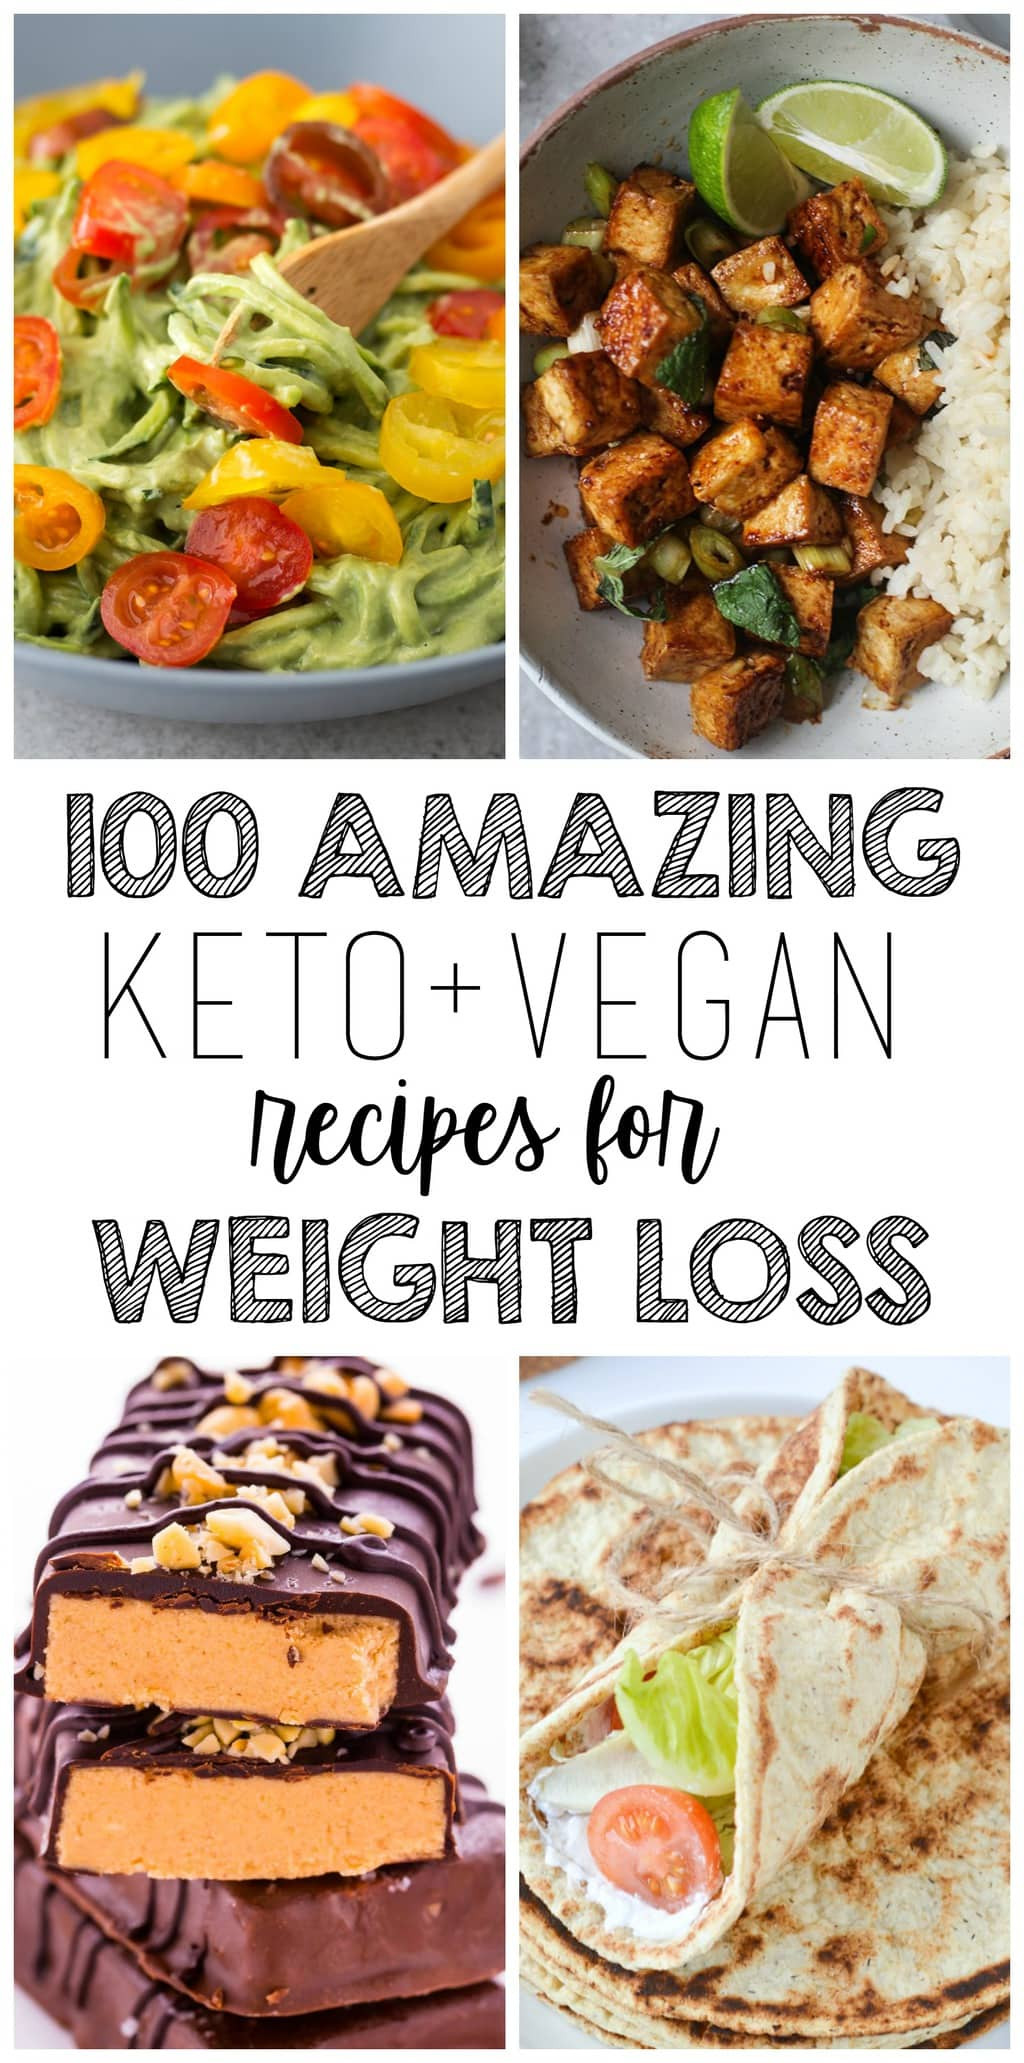 Vegetarian Keto Recipes Videos
 100 AMAZING Keto Vegan Recipes For Weight Loss